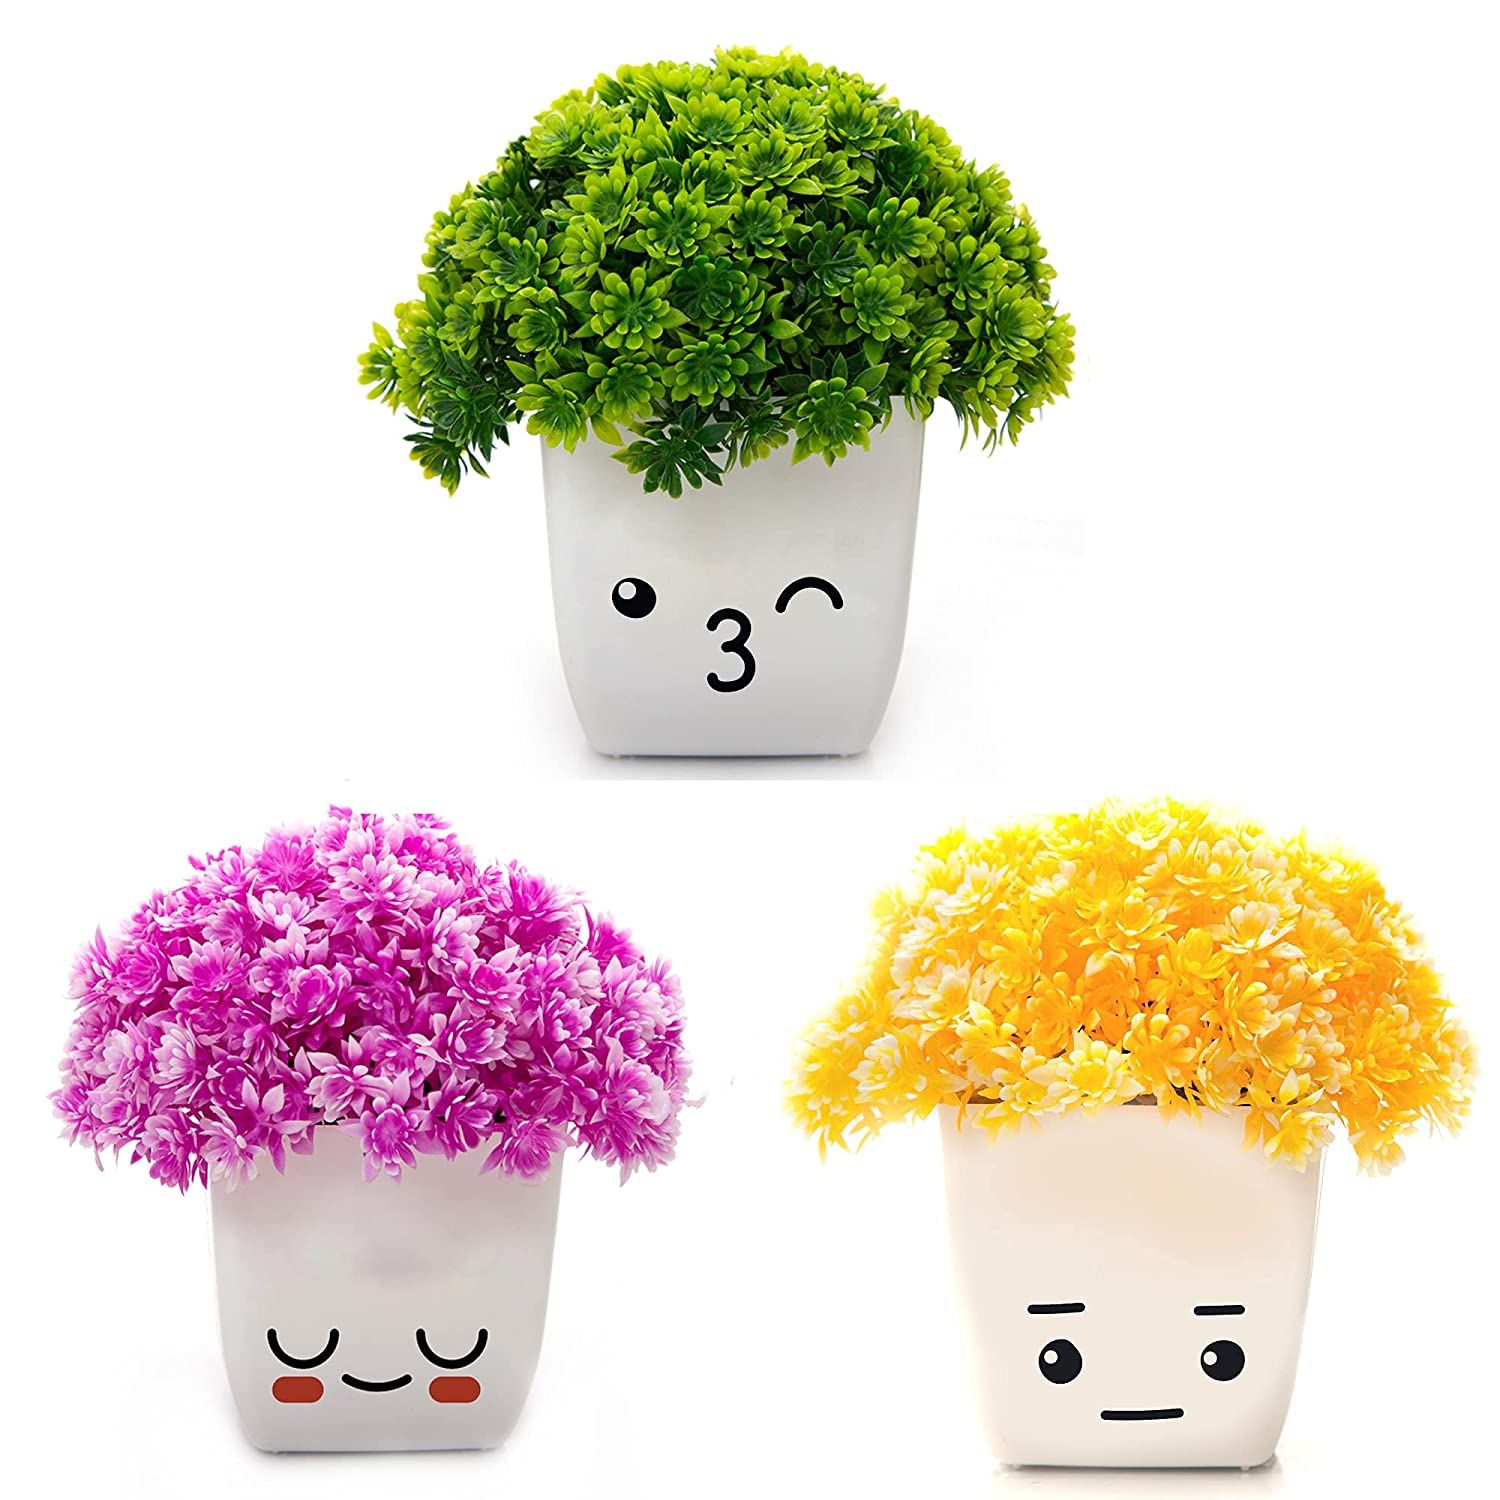 Artificial Plants with Emoji